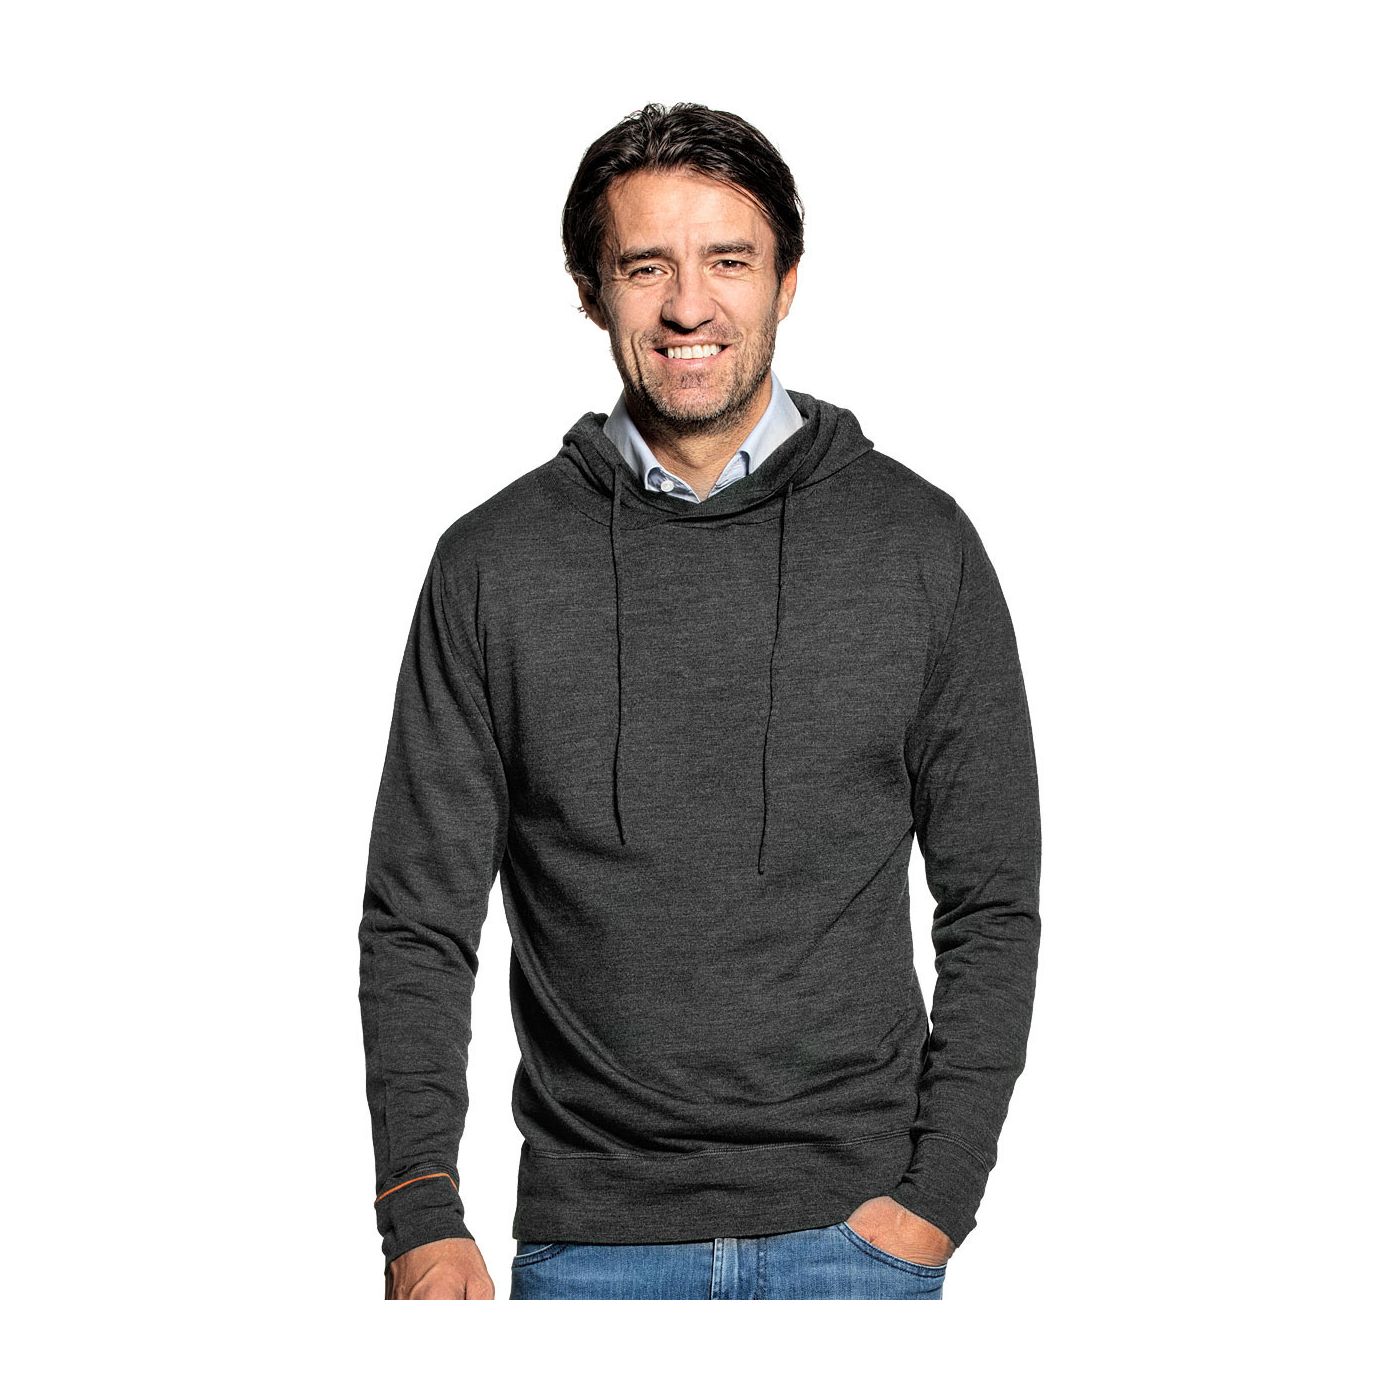 Sweater with hoodie for men made of Merino wool in Dark grey